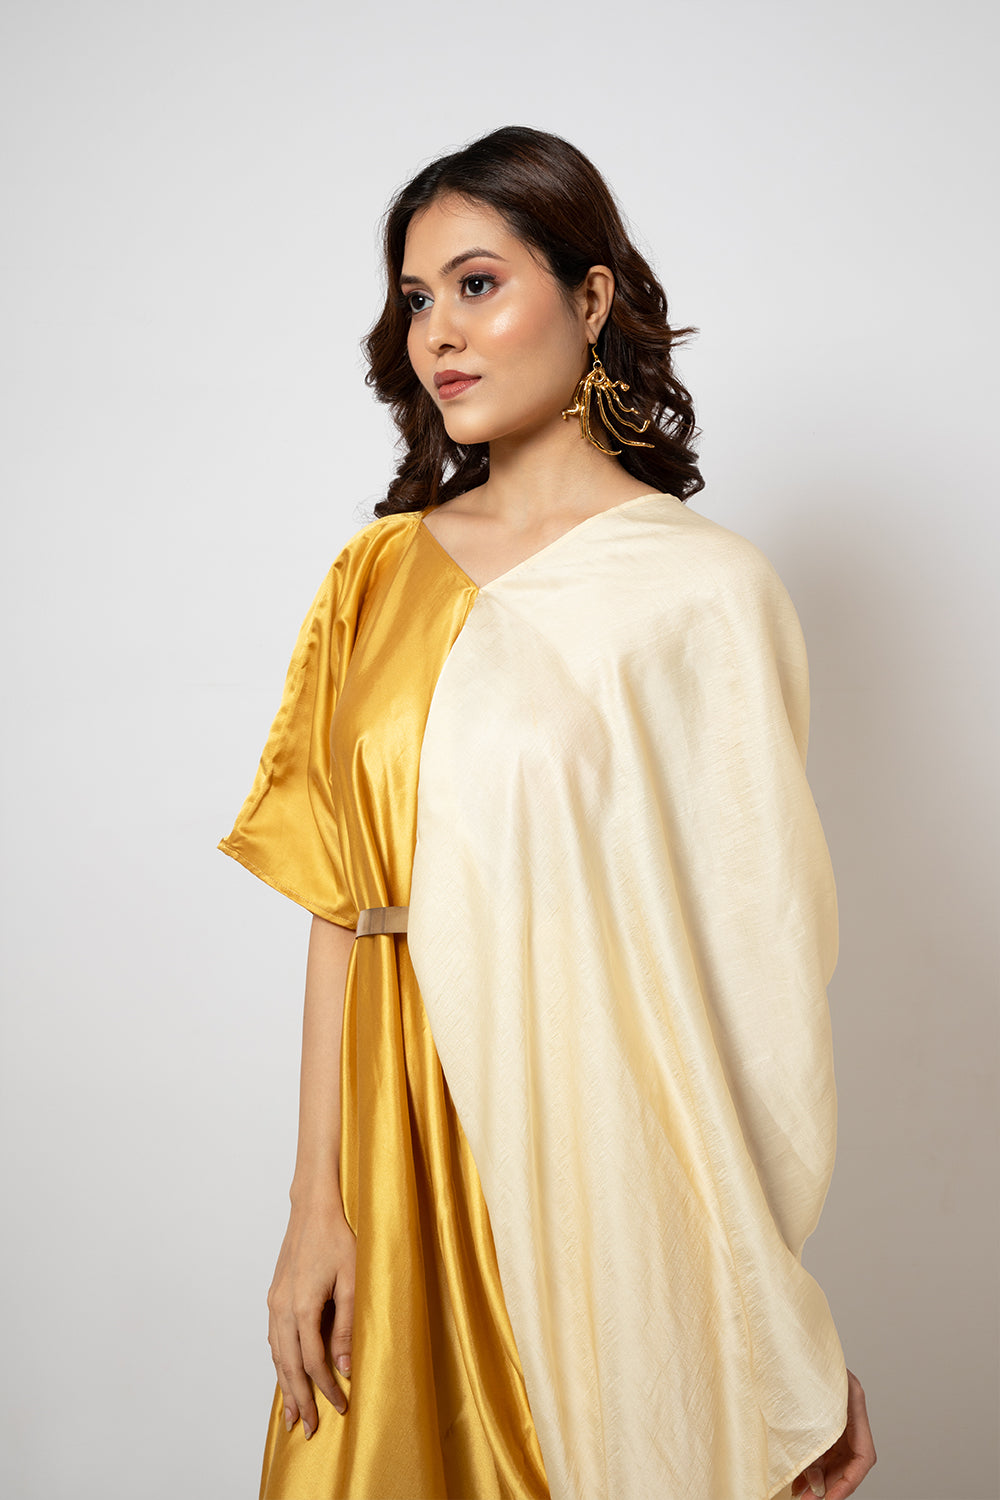 1. A zero waste asymmetrical satin  &silk blend off white & yellow dress